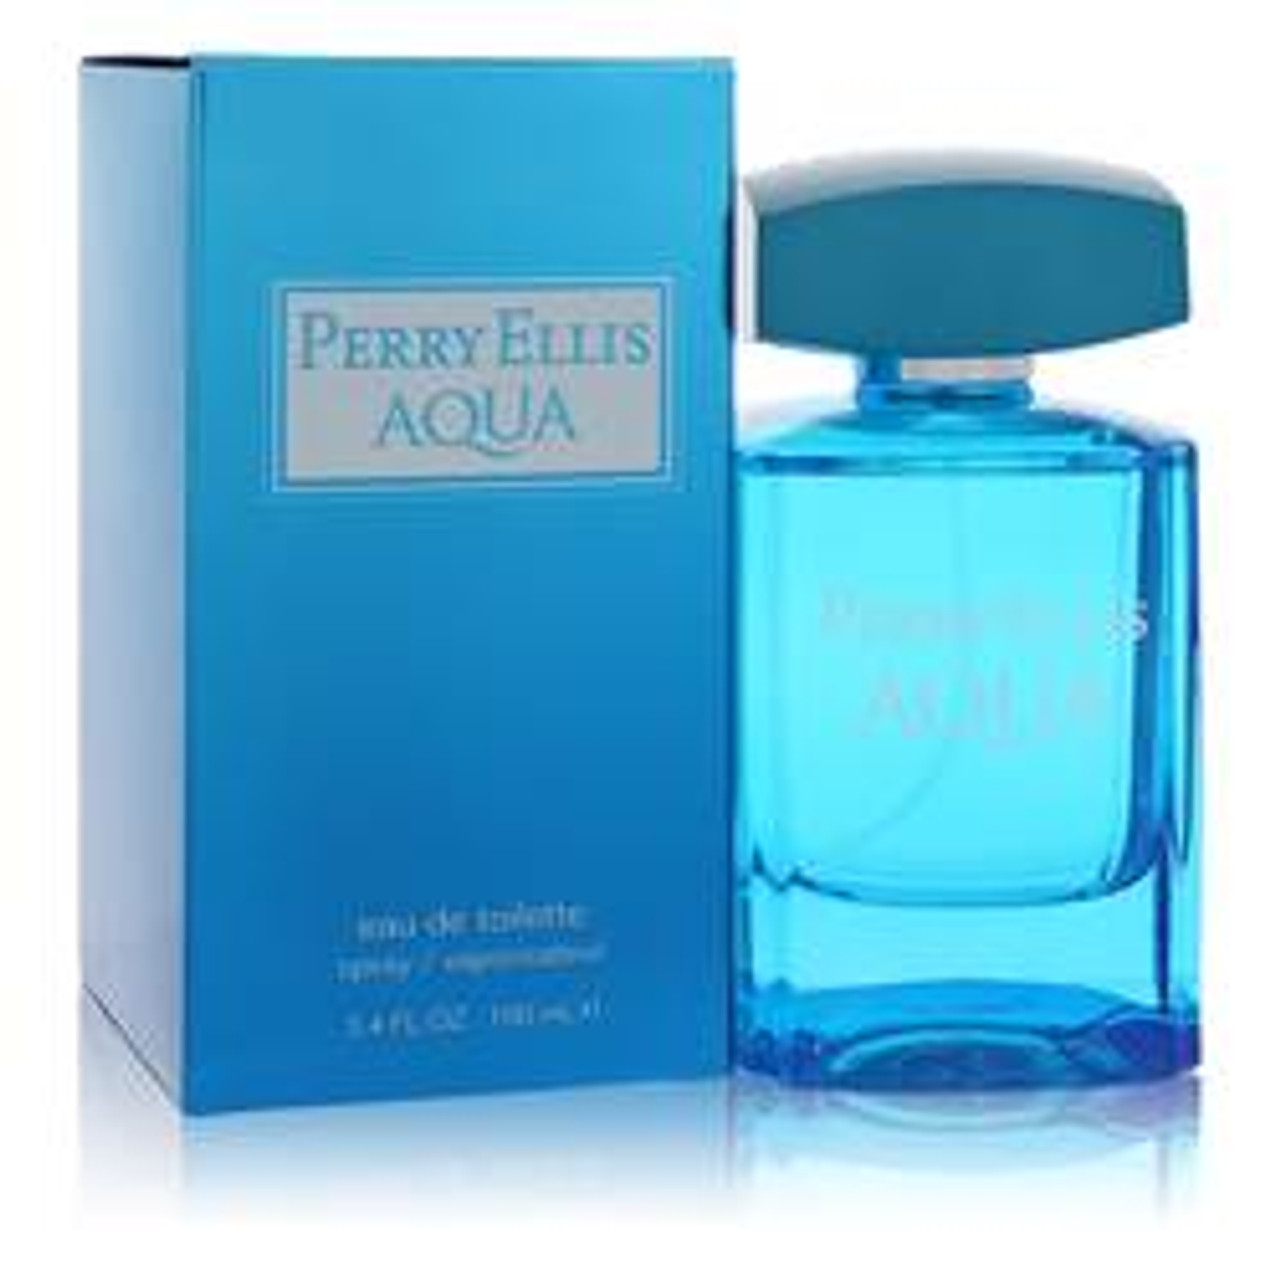 Perry Ellis Aqua Cologne By Perry Ellis Eau De Toilette Spray 3.4 oz for Men - [From 83.00 - Choose pk Qty ] - *Ships from Miami